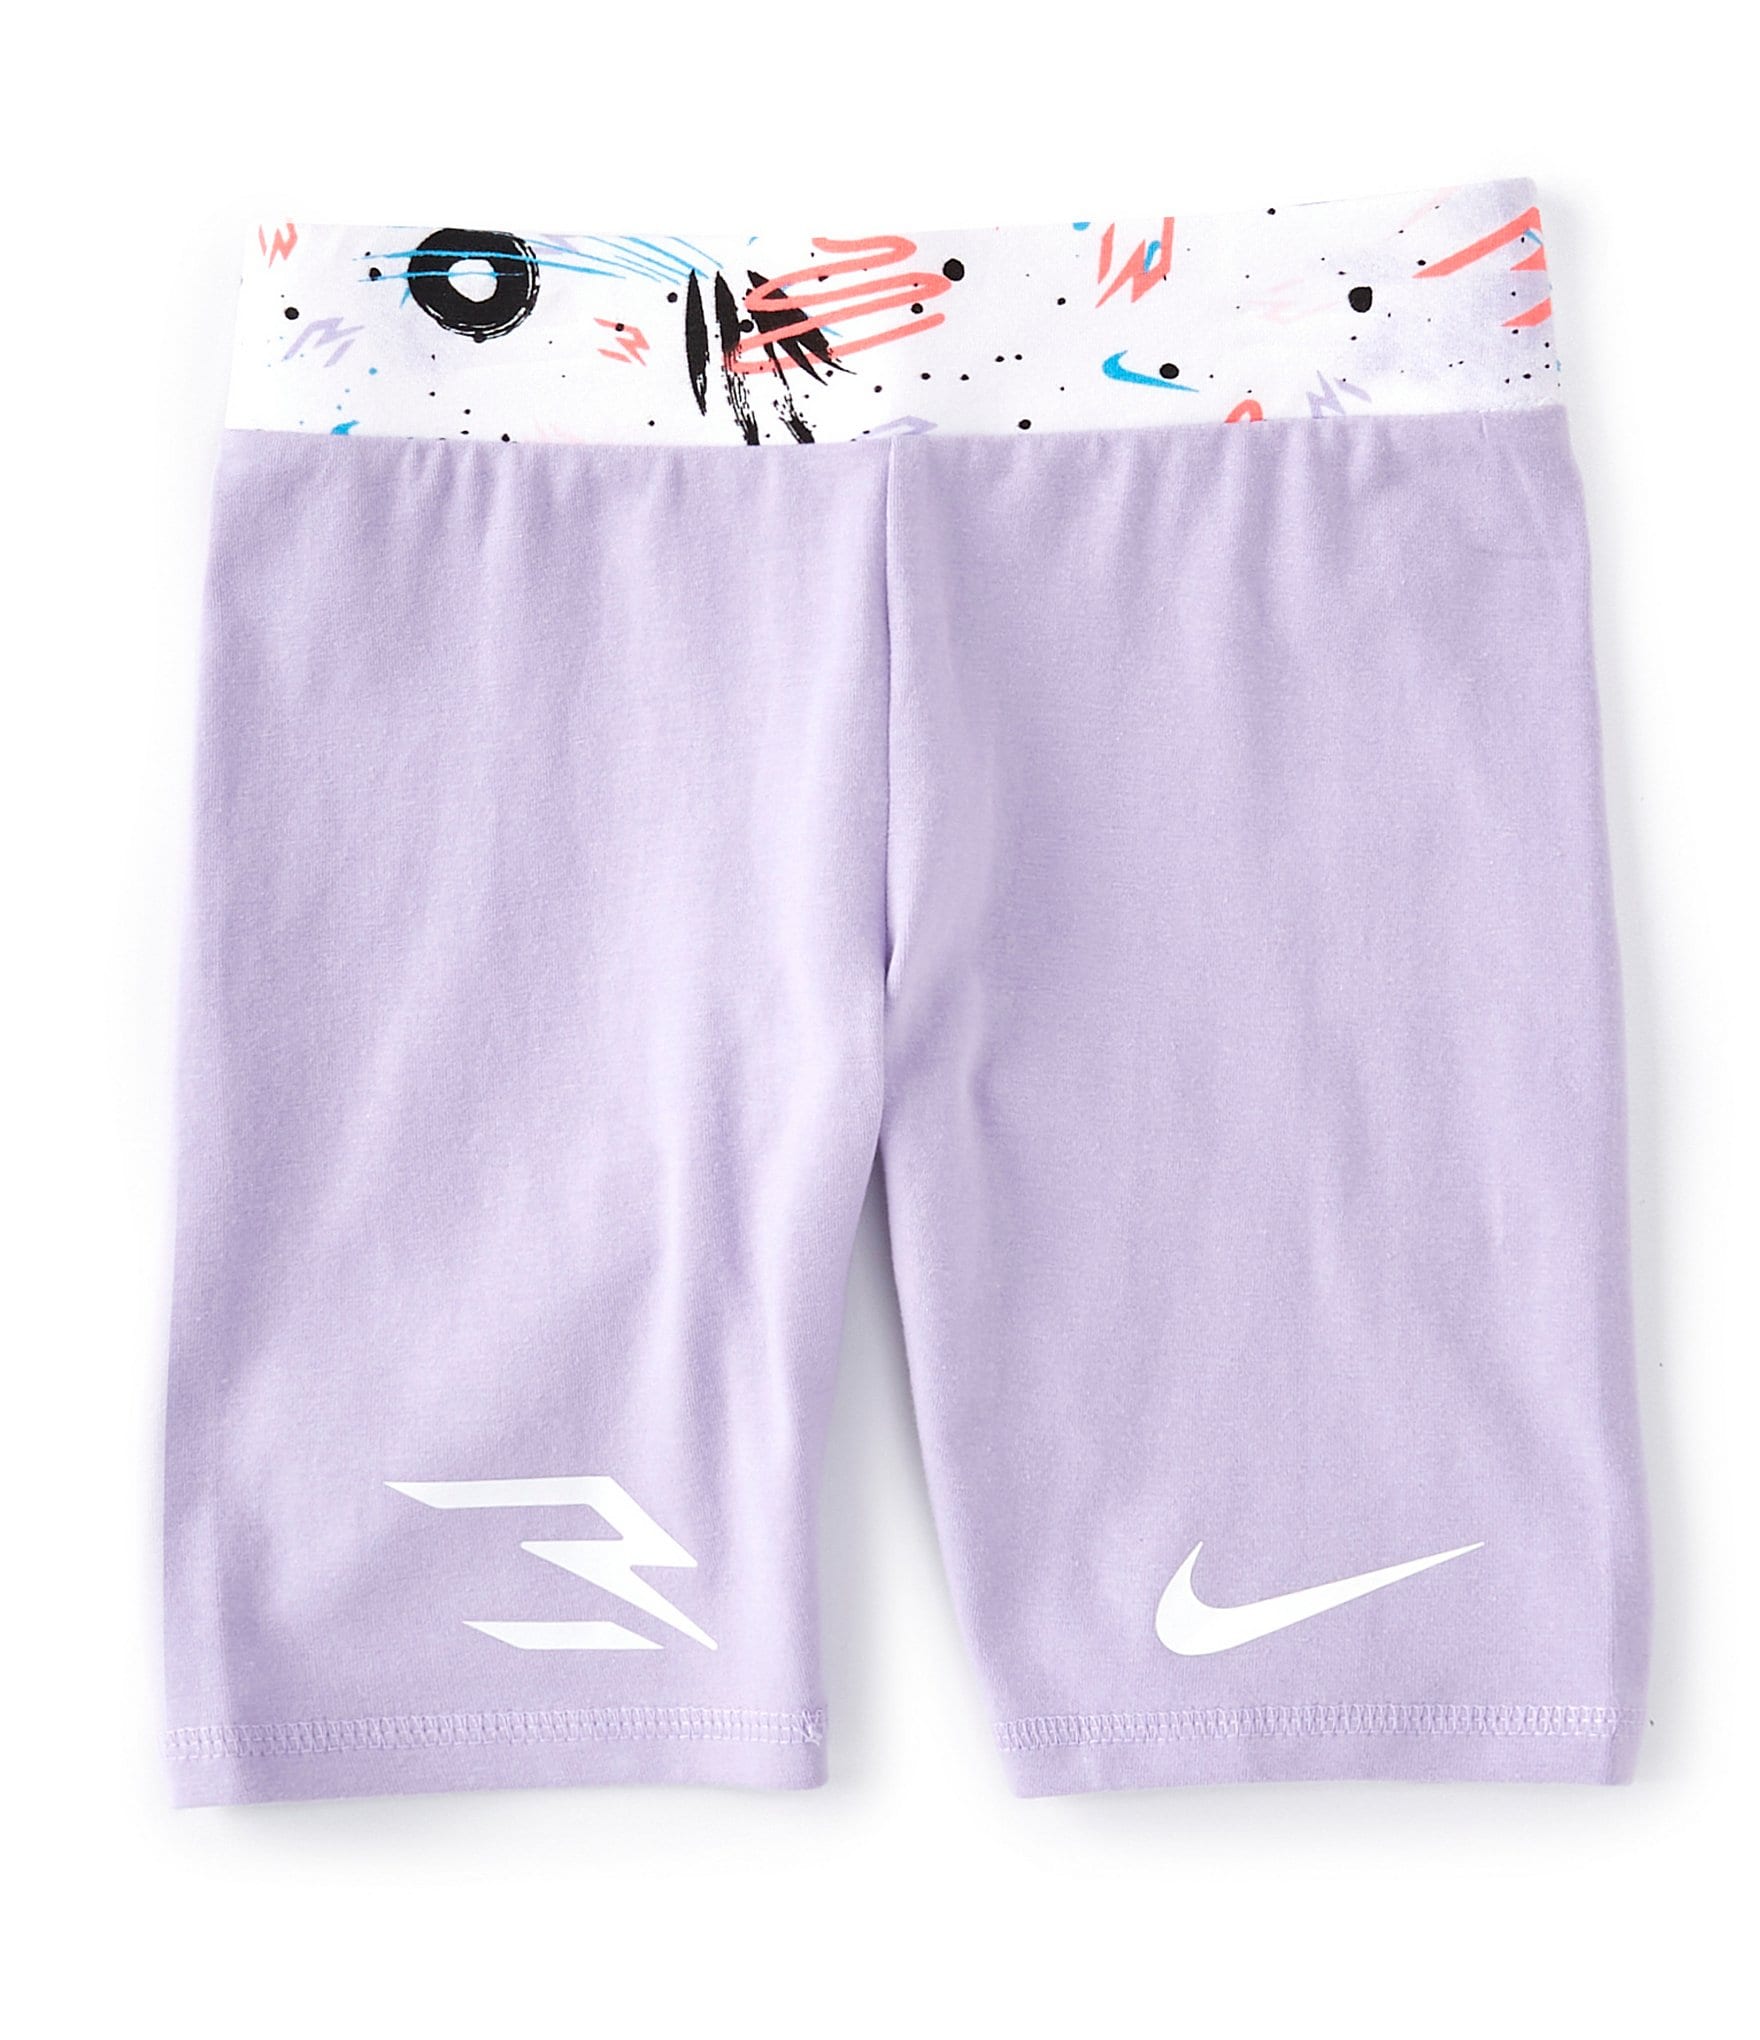 908728 Nike Men's Vapor Untouchable Pants Football Casual White/Black XL -  Walmart.com